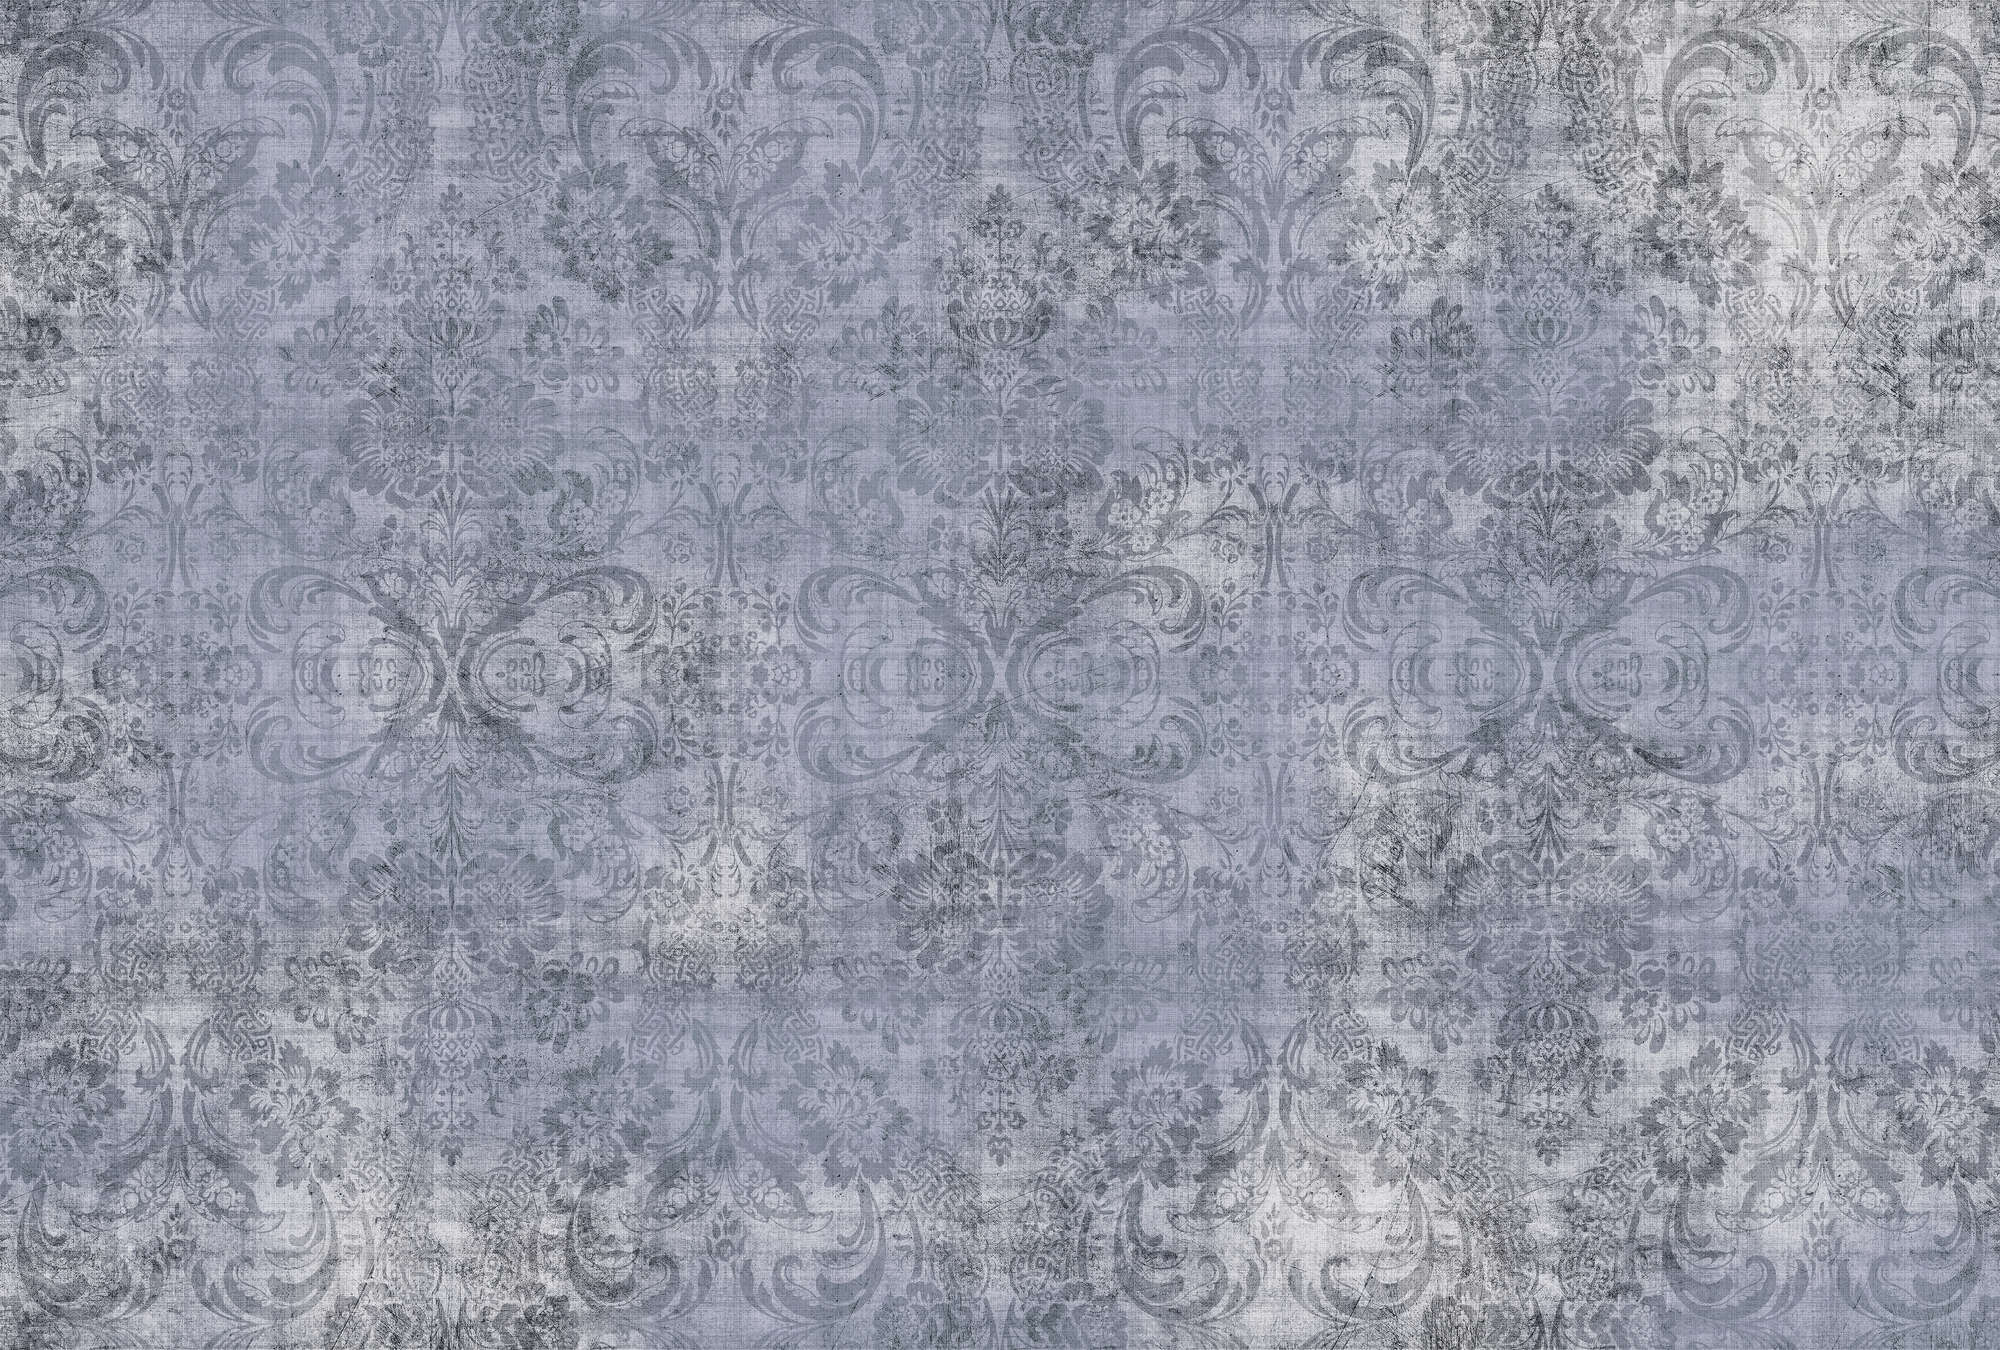             Old damask 3 - carta da parati in lino naturale struttura blu screziata ornamenti - Blu | Natura qualita consistenza tessuto non tessuto
        